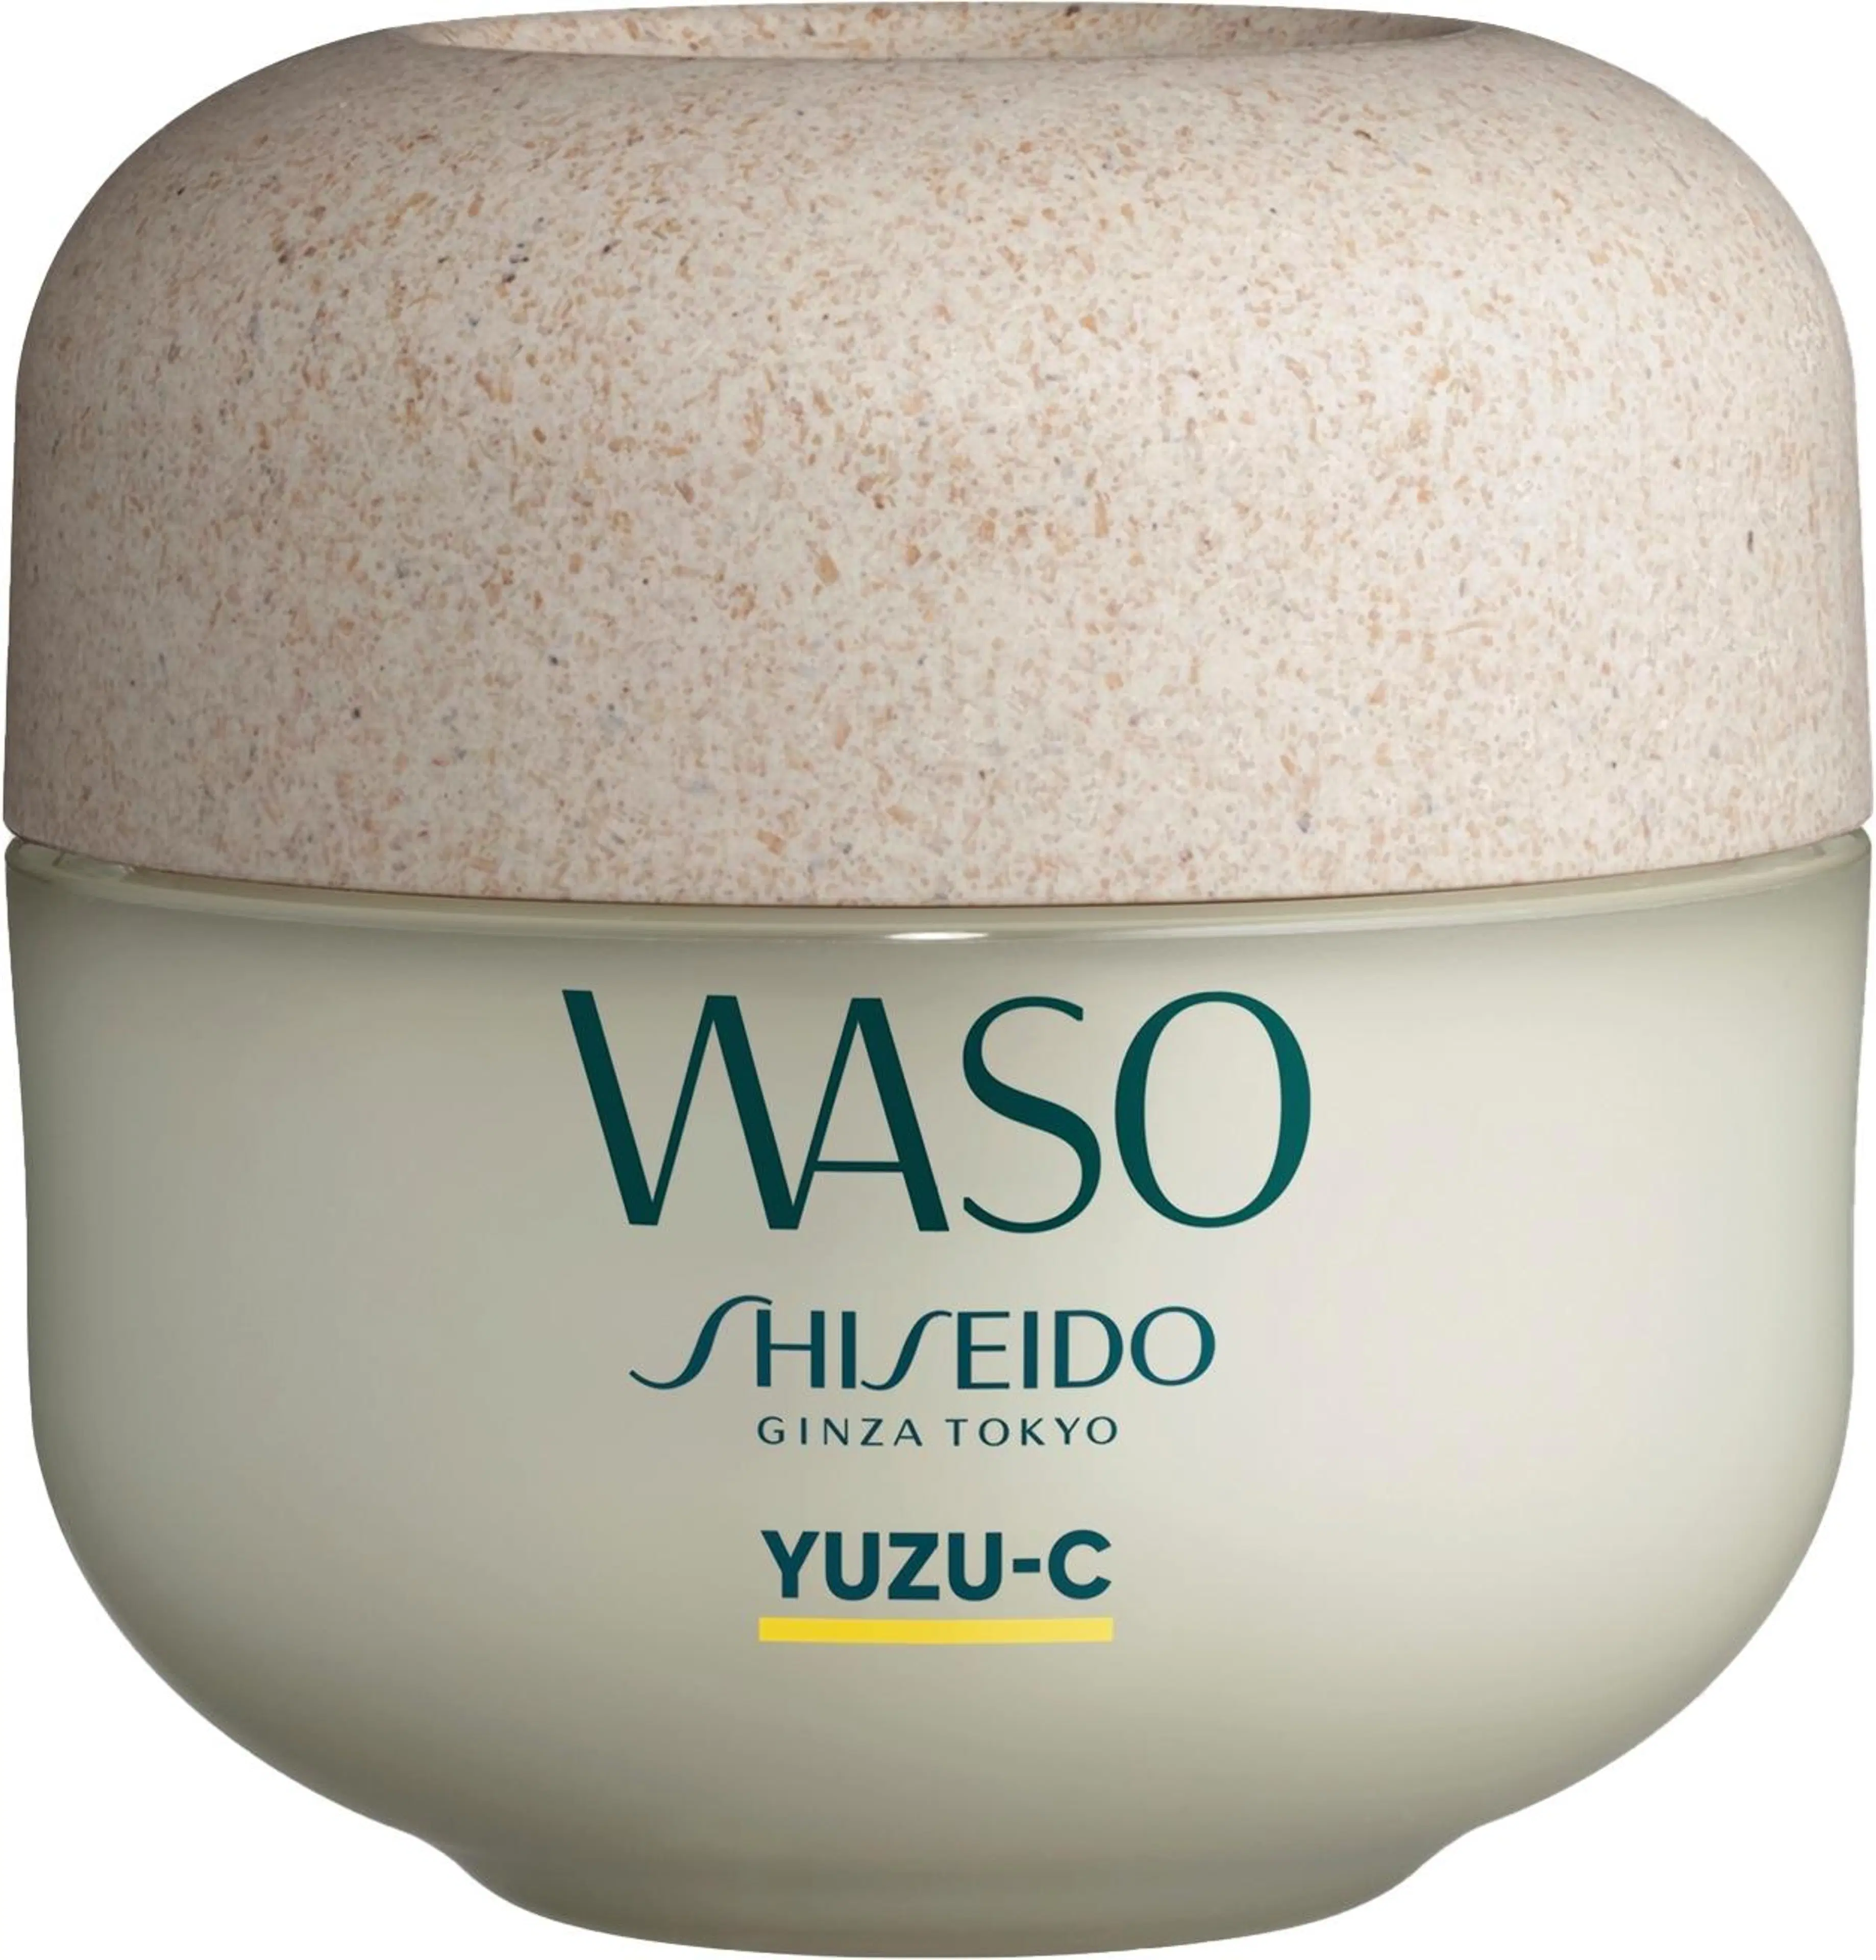 Shiseido WASO Yuzu-C Beauty Sleeping Mask kasvonaamio 50 ml